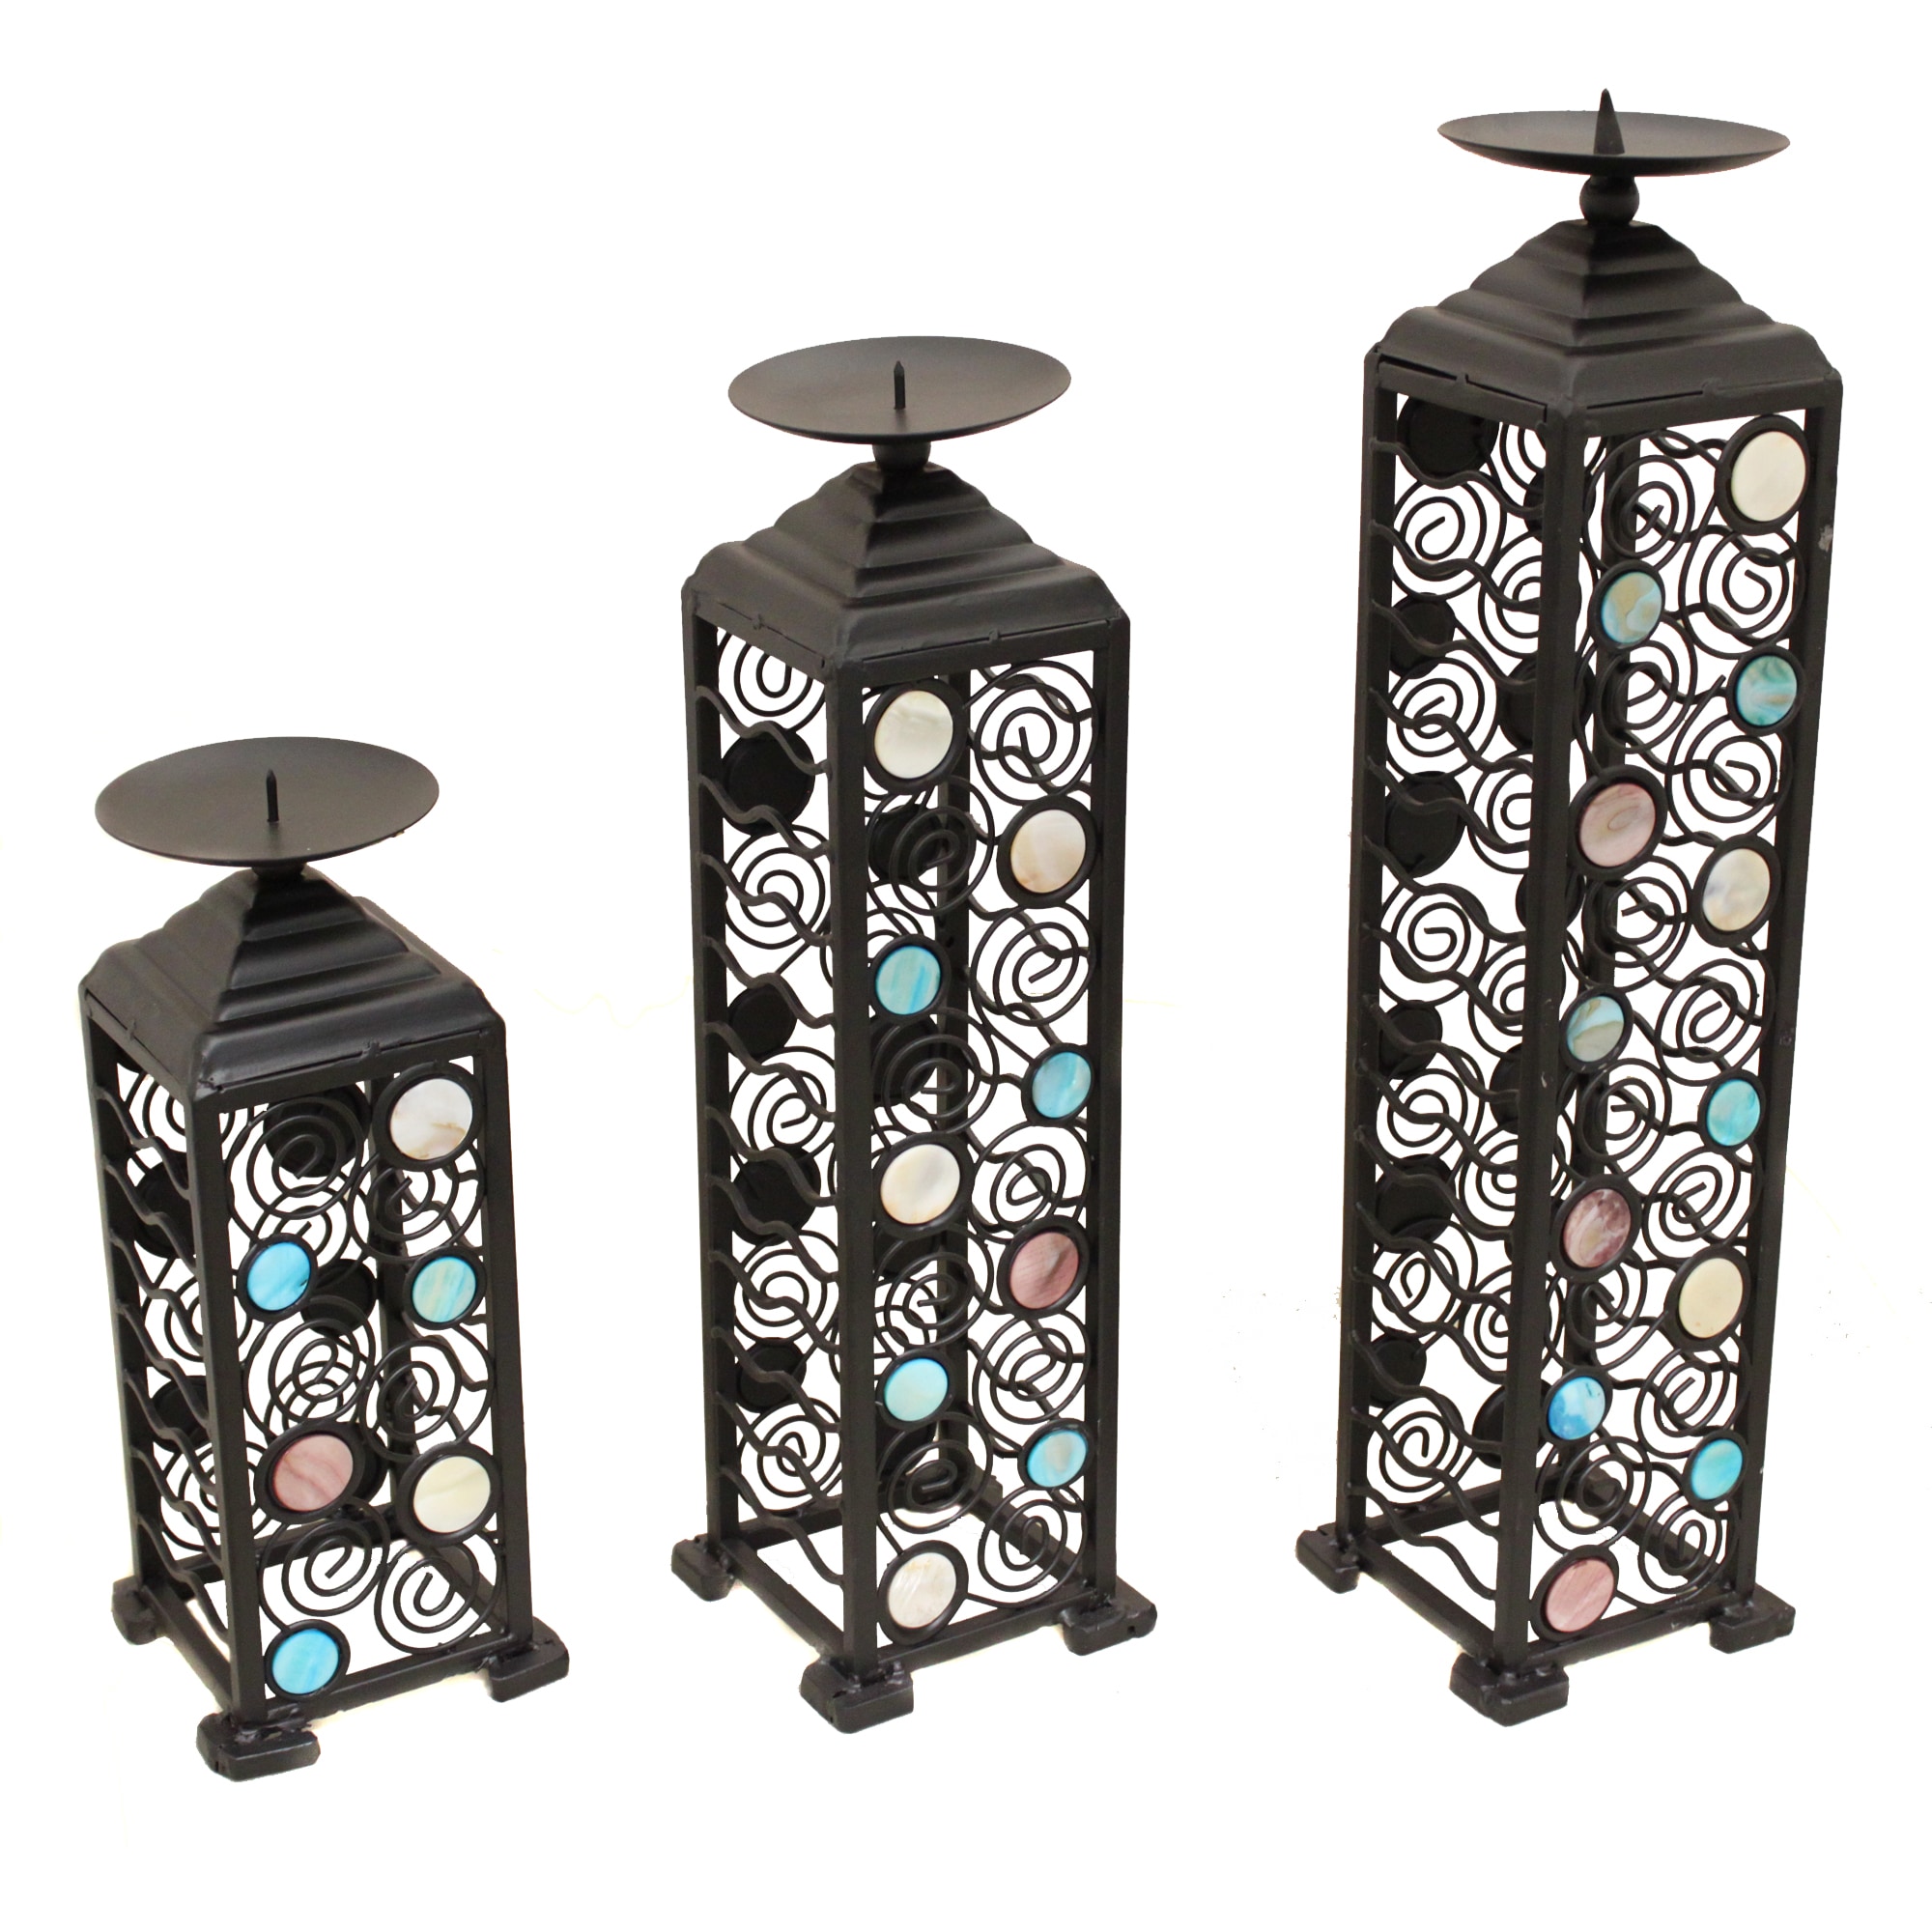 Black Noir Fusion Metal Pillar Candle Holders (Set of 3) Compare $69